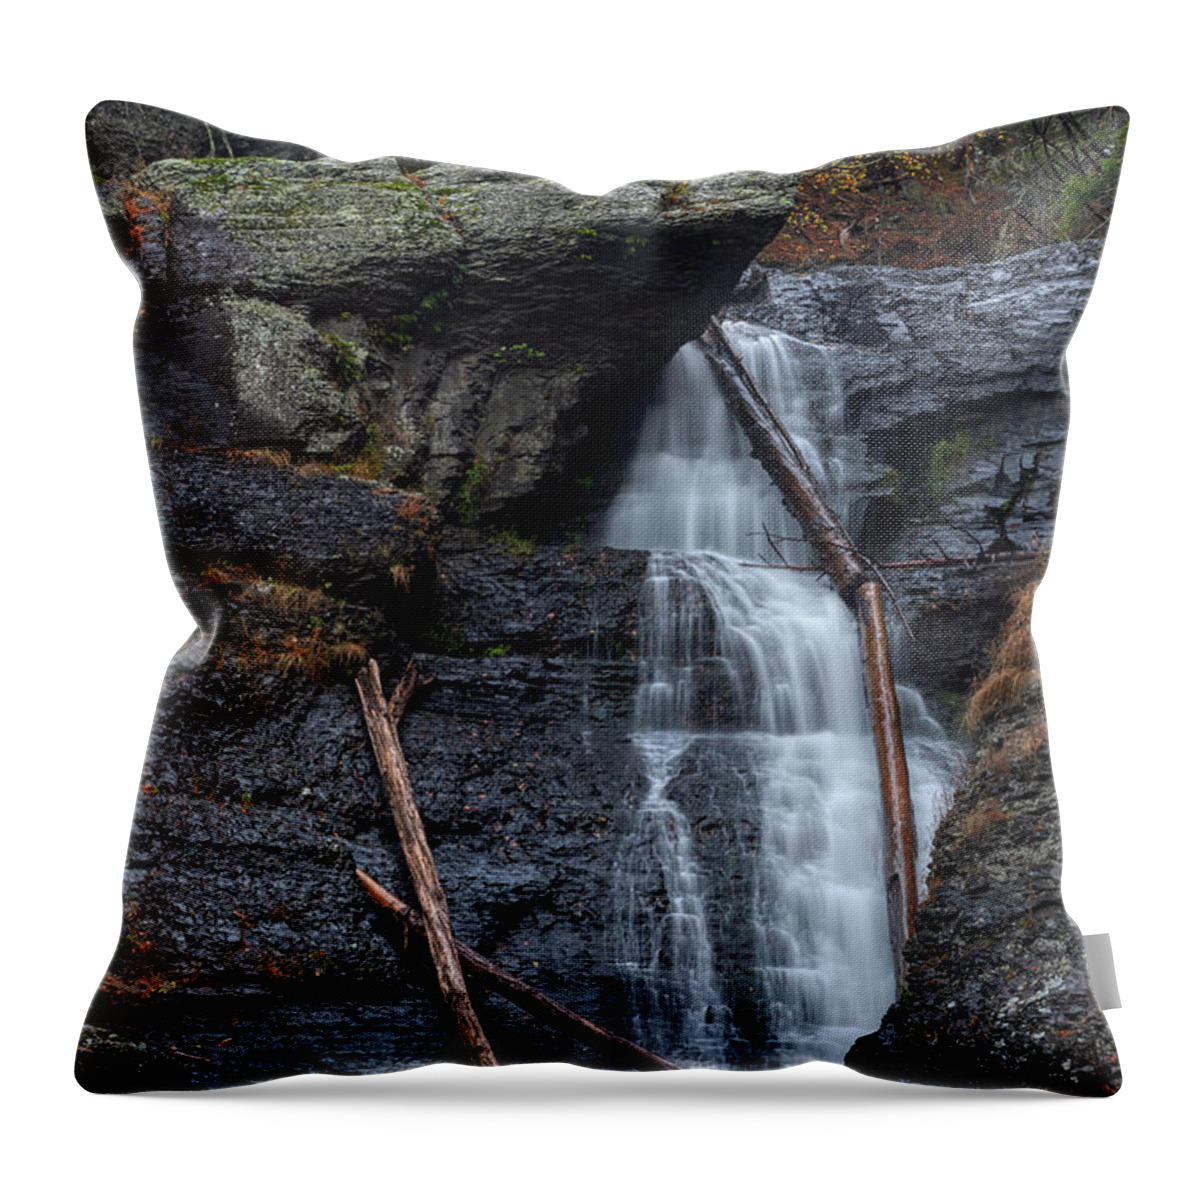 Pennsylvania Throw Pillow featuring the photograph Raymondskills Falls by Paul Freidlund